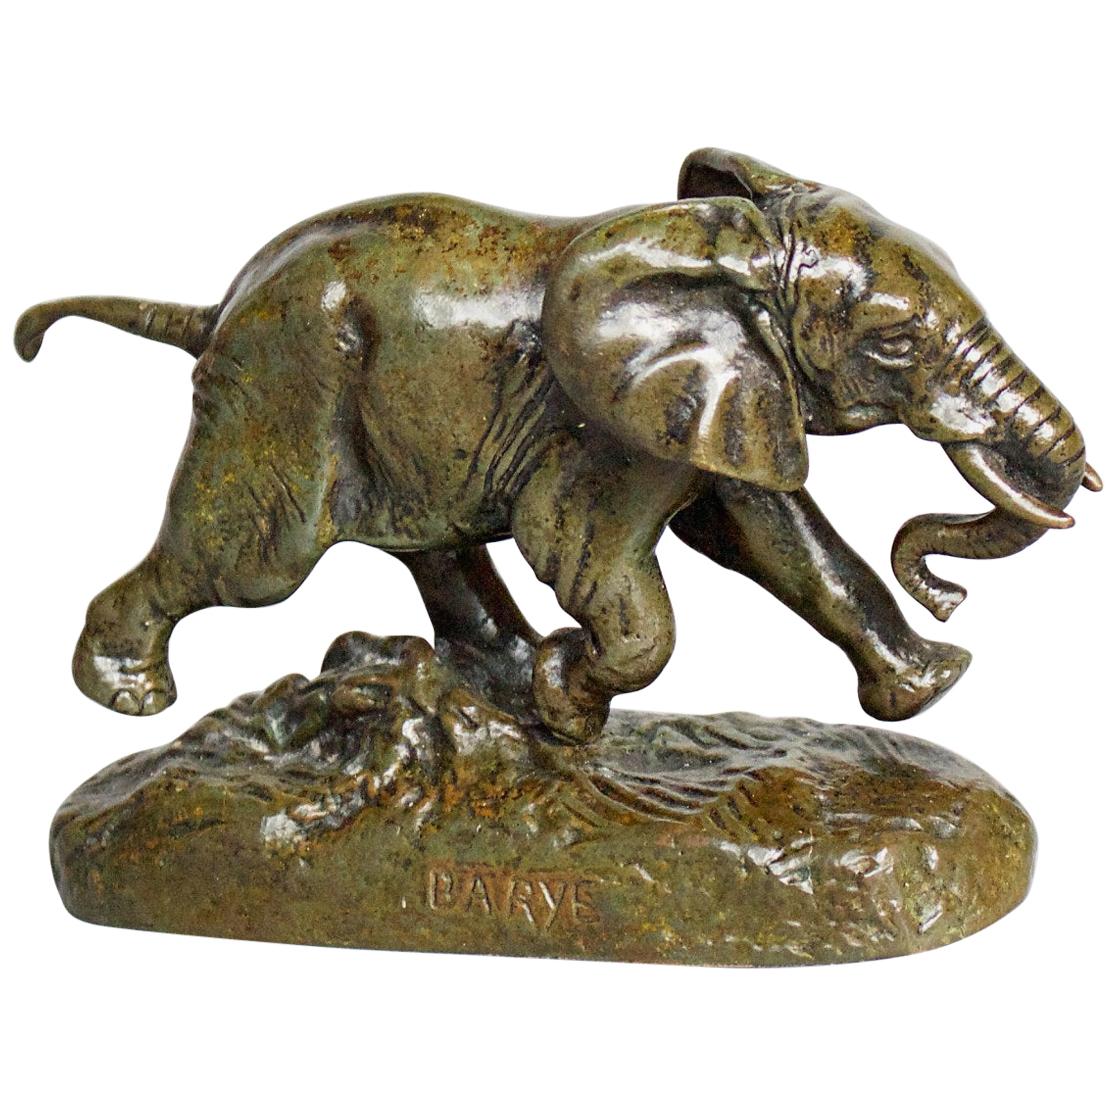 Late 19th Century Bronze Sculpture 'Elephant du Senegal' by Antoine-Louis Barye